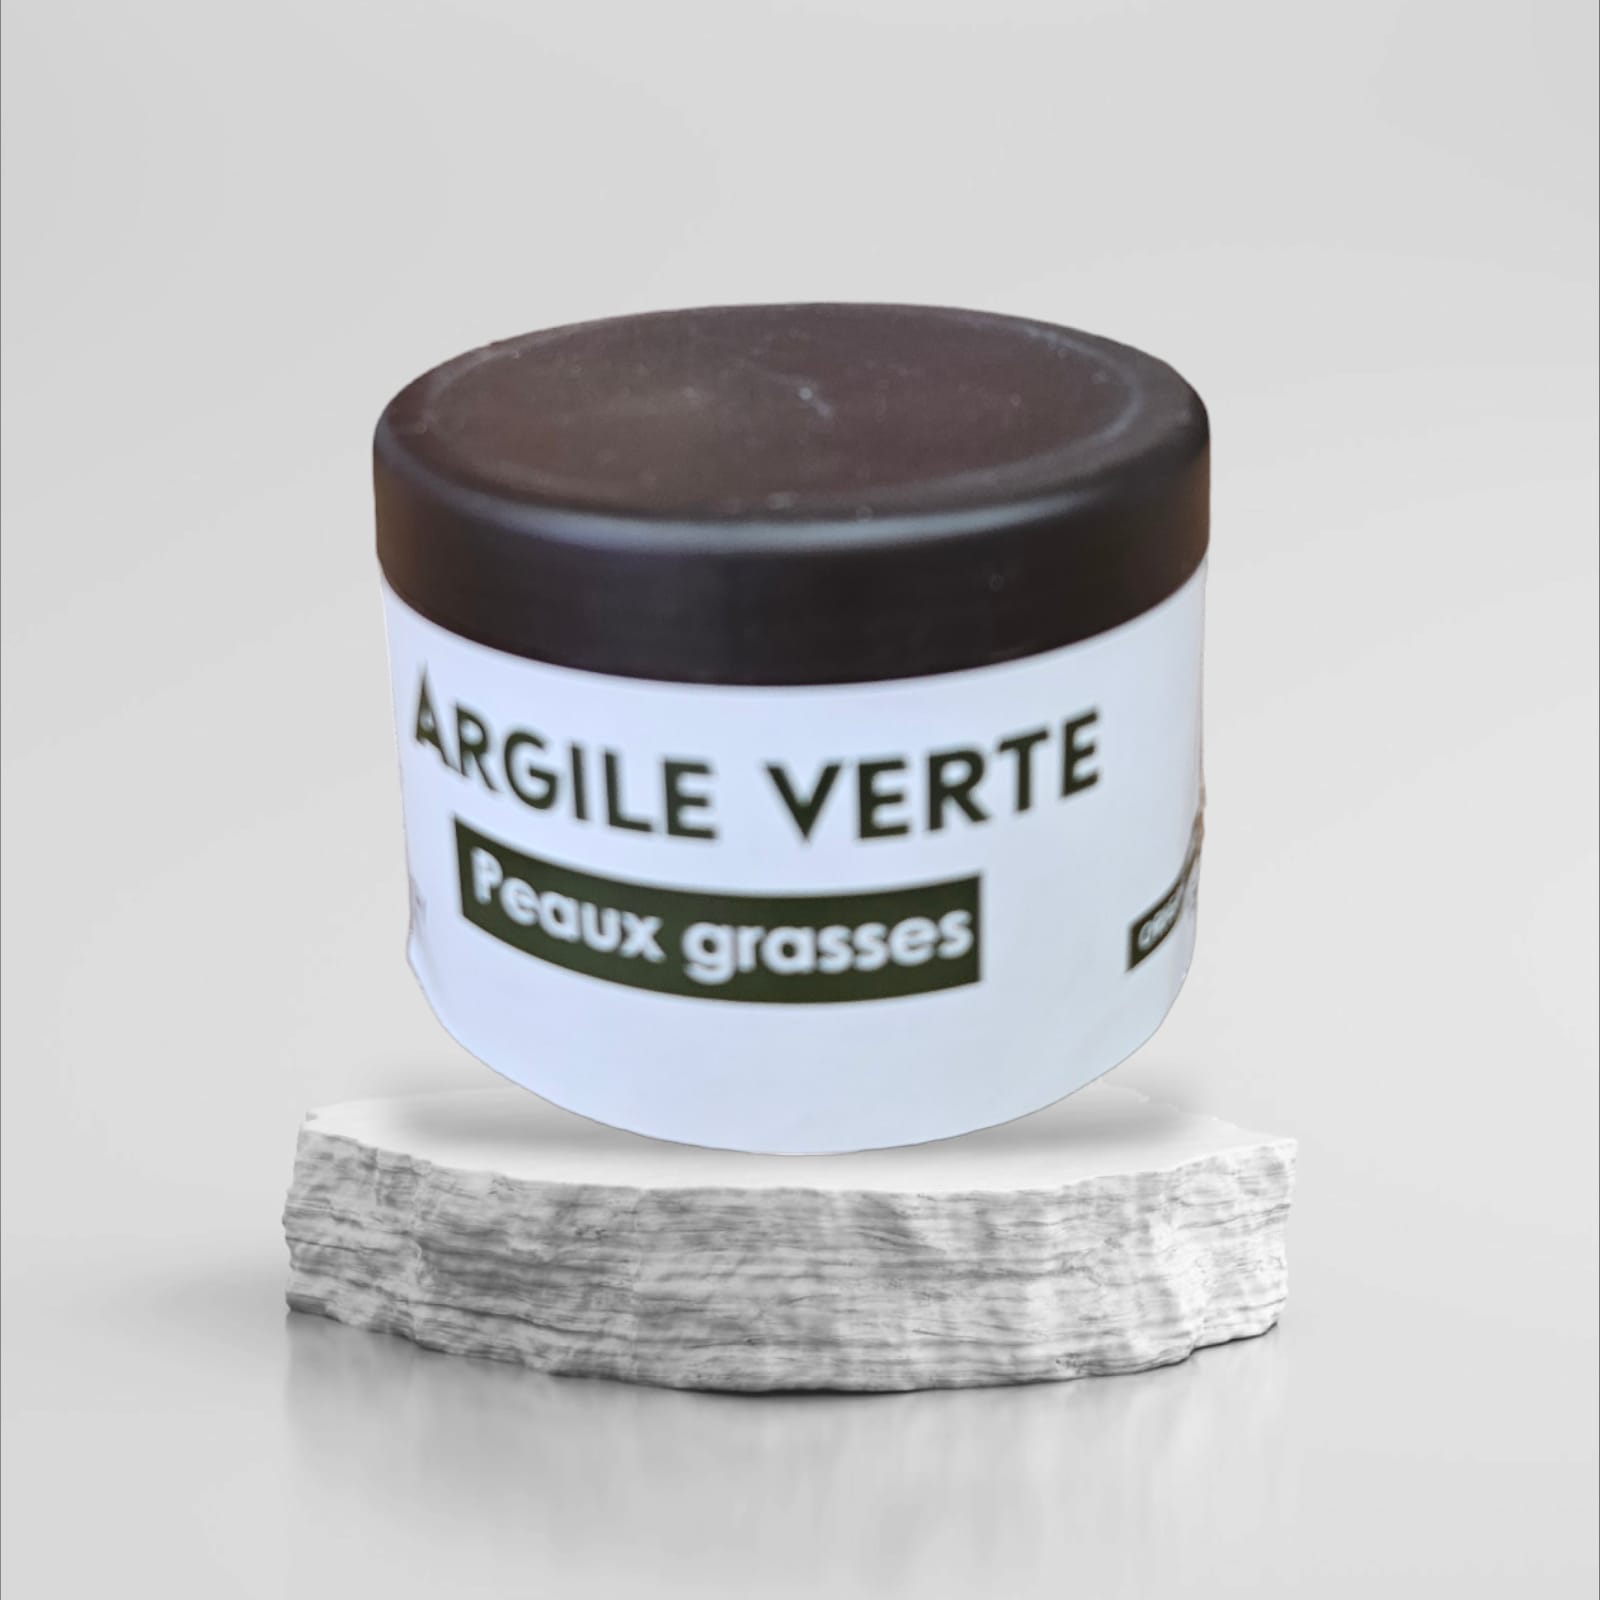 Argile verte Peaux grasses - 150 g